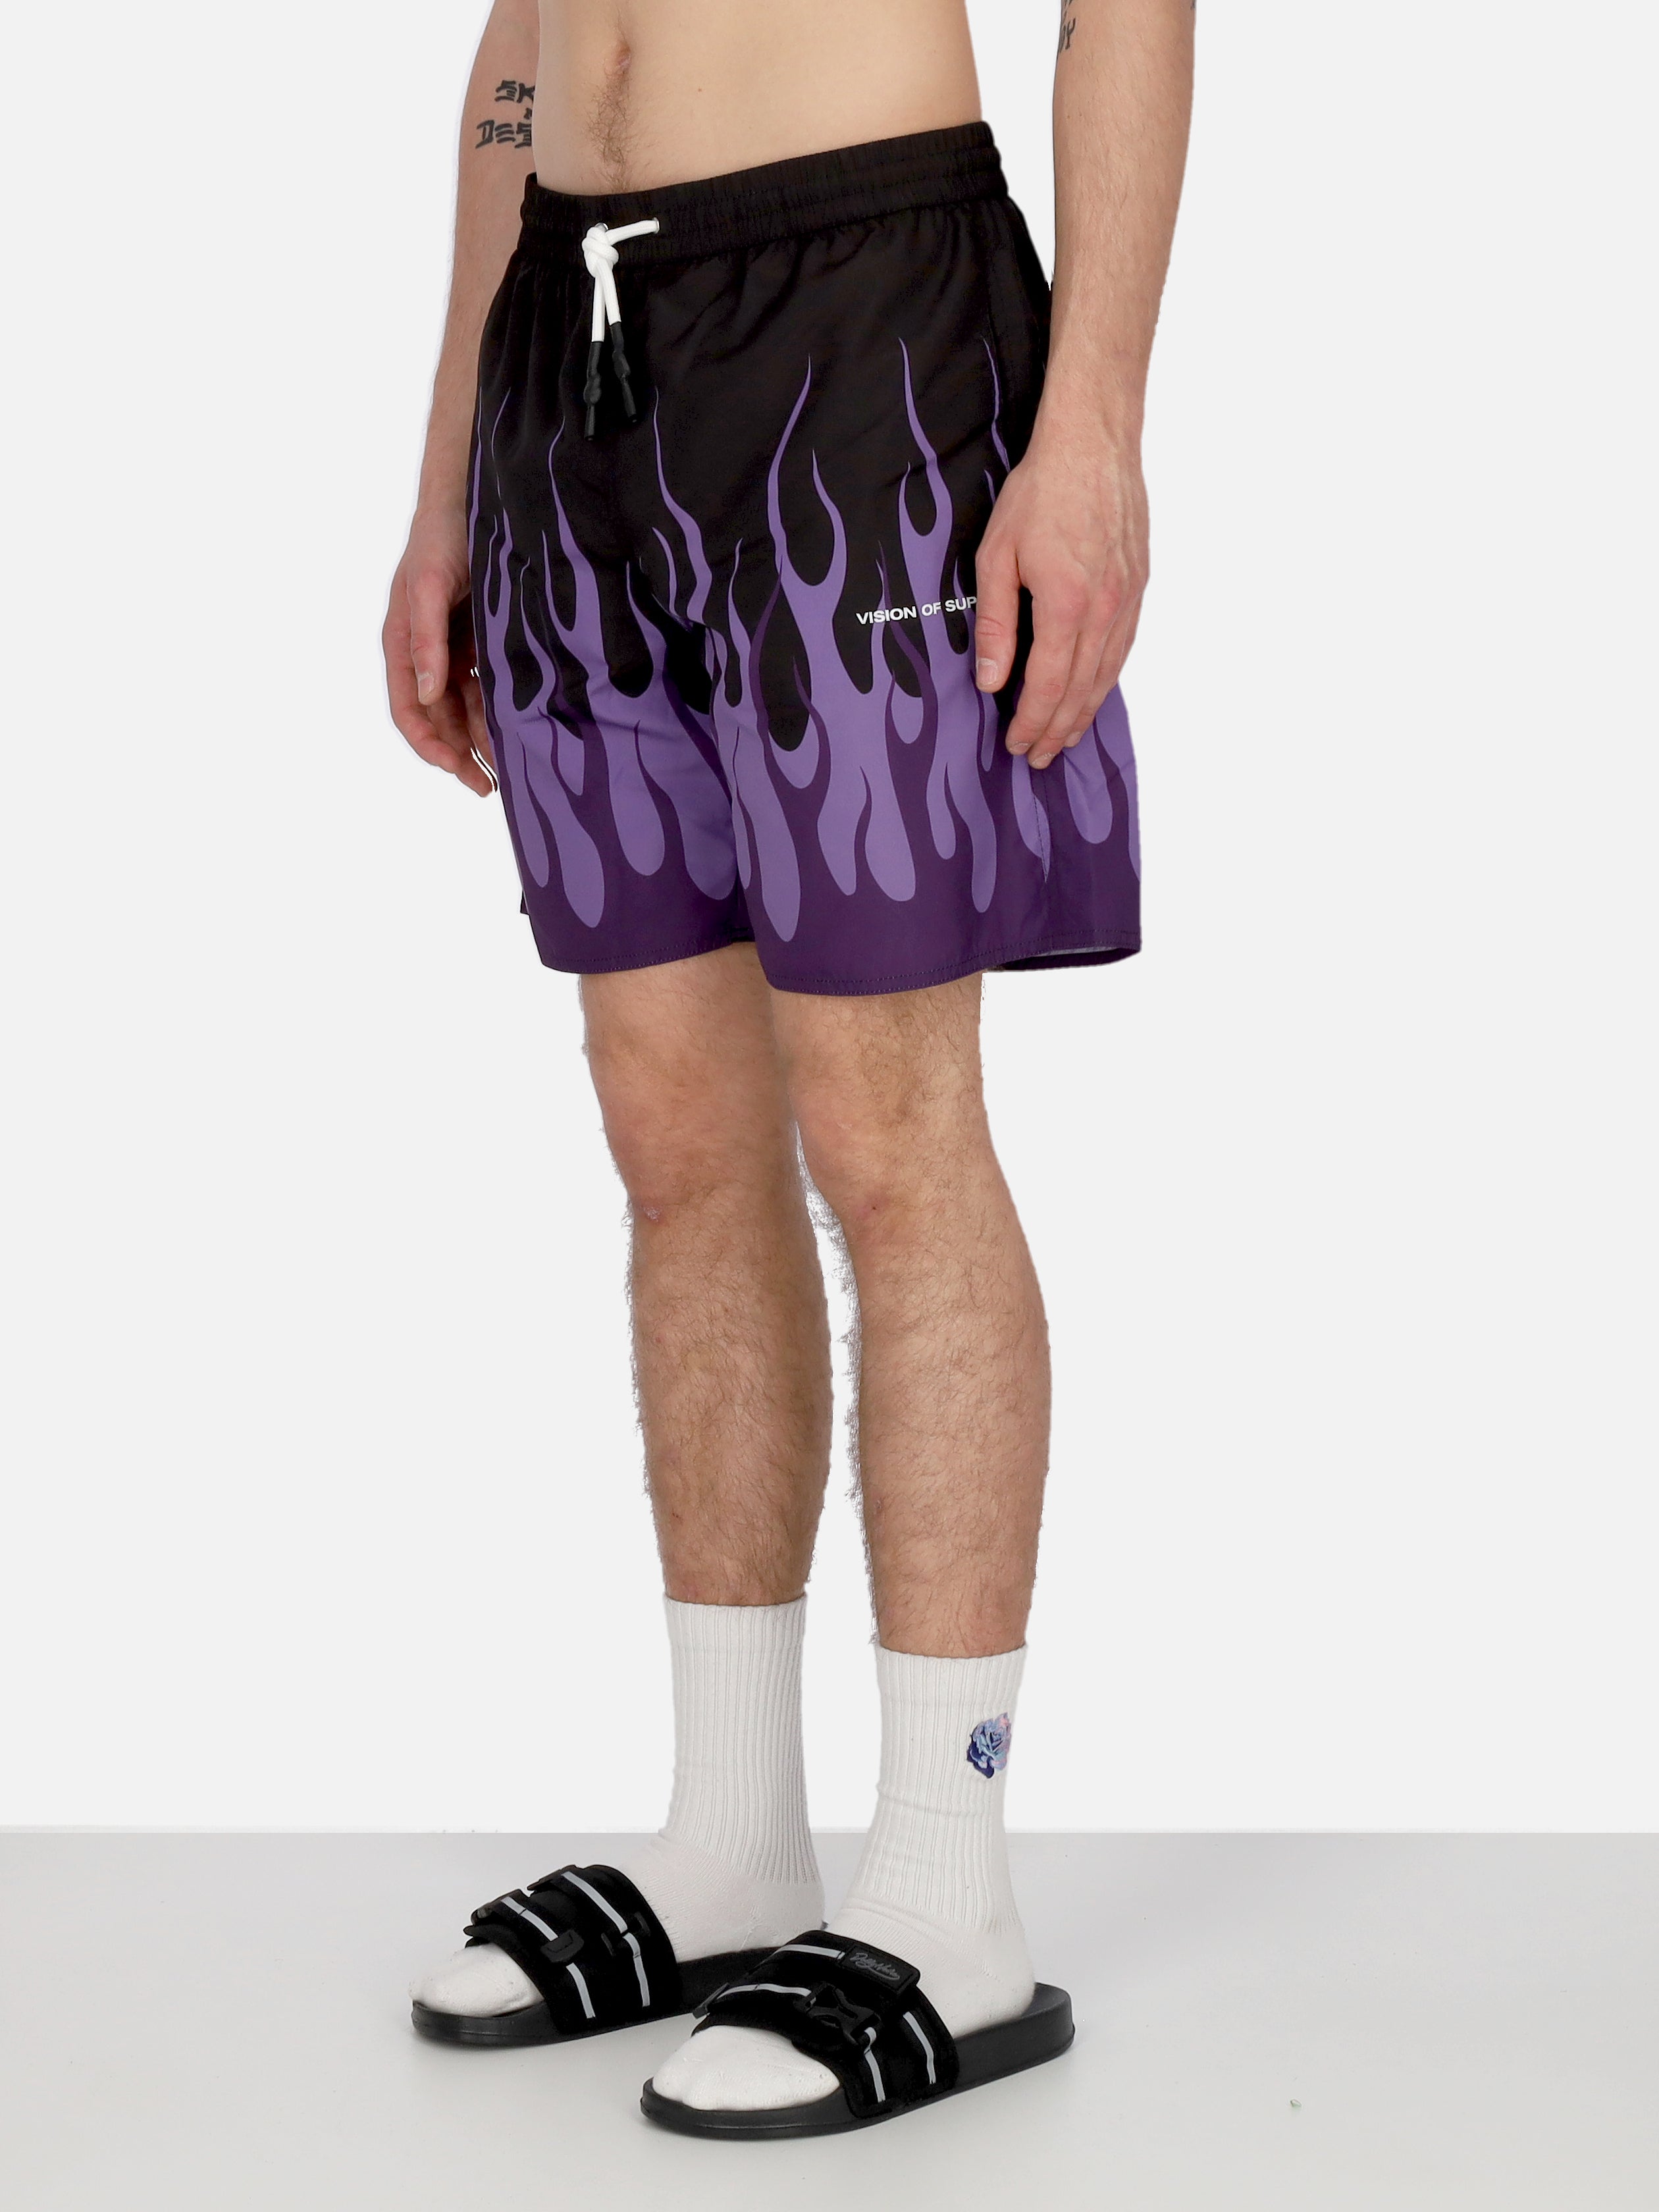 Costume Pantaloncino Uomo Double Flames Swimwear Black/purple VS01101